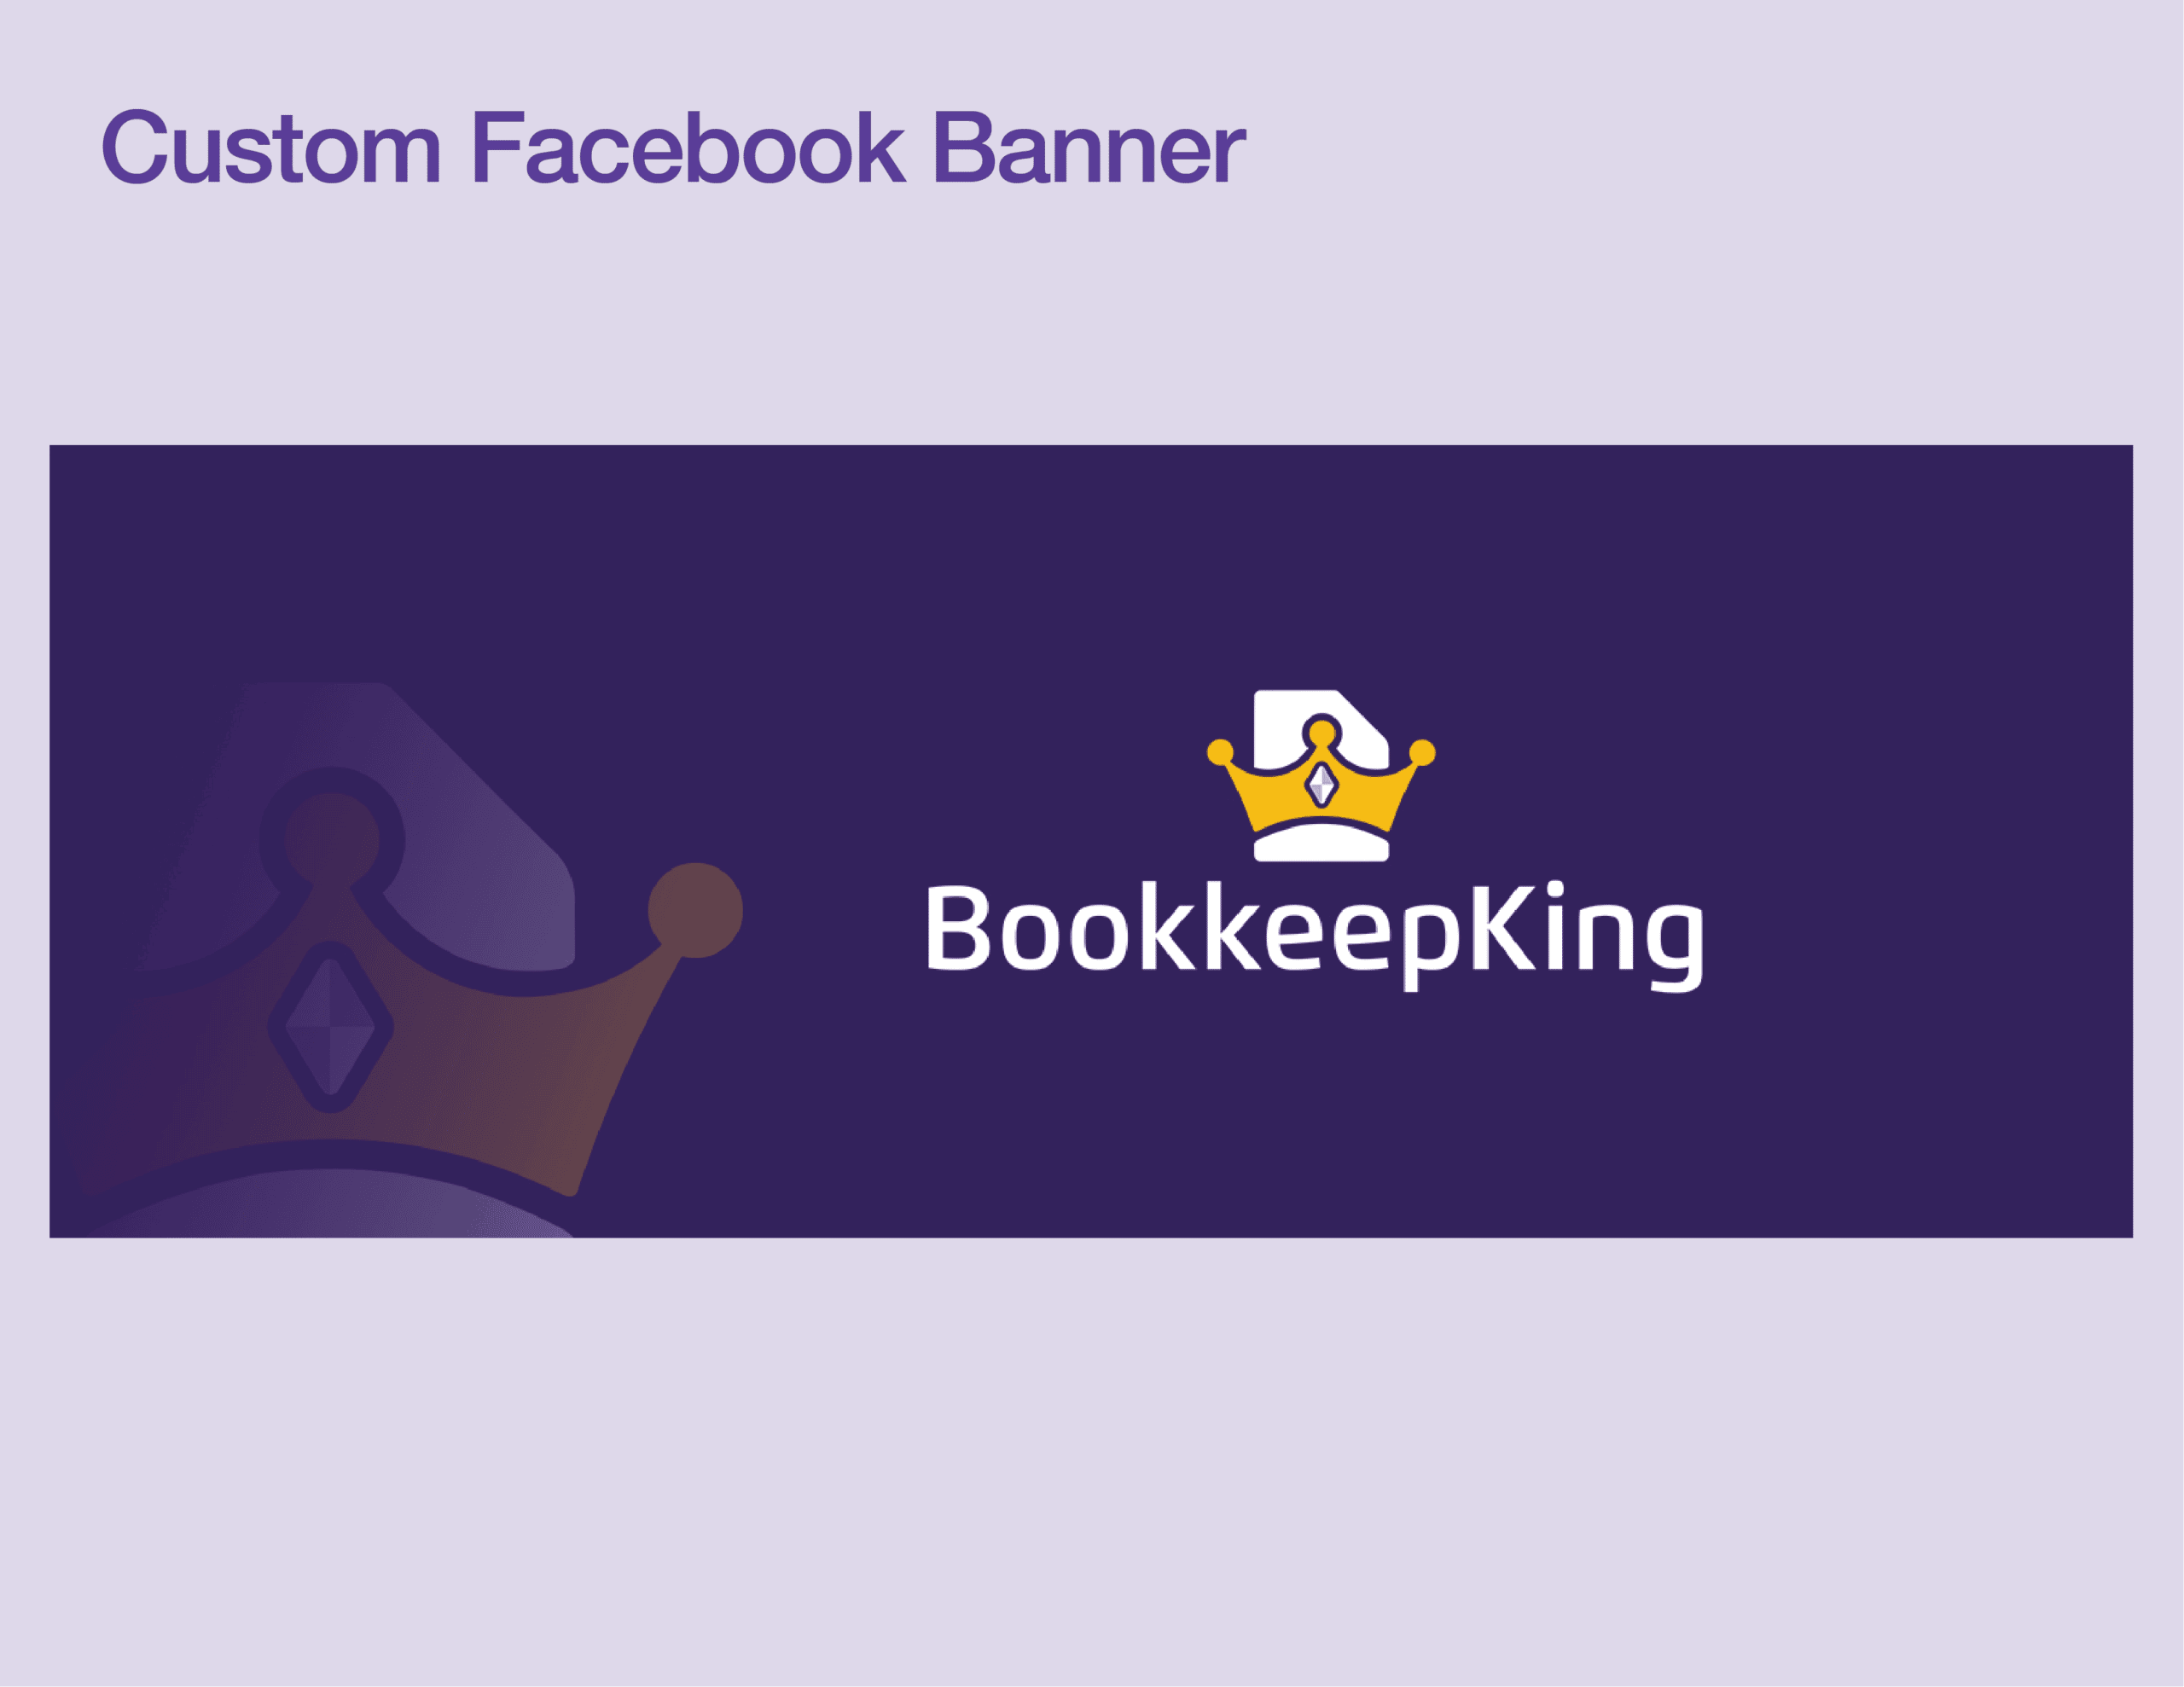 06 - Custom Facebook Banner (1)